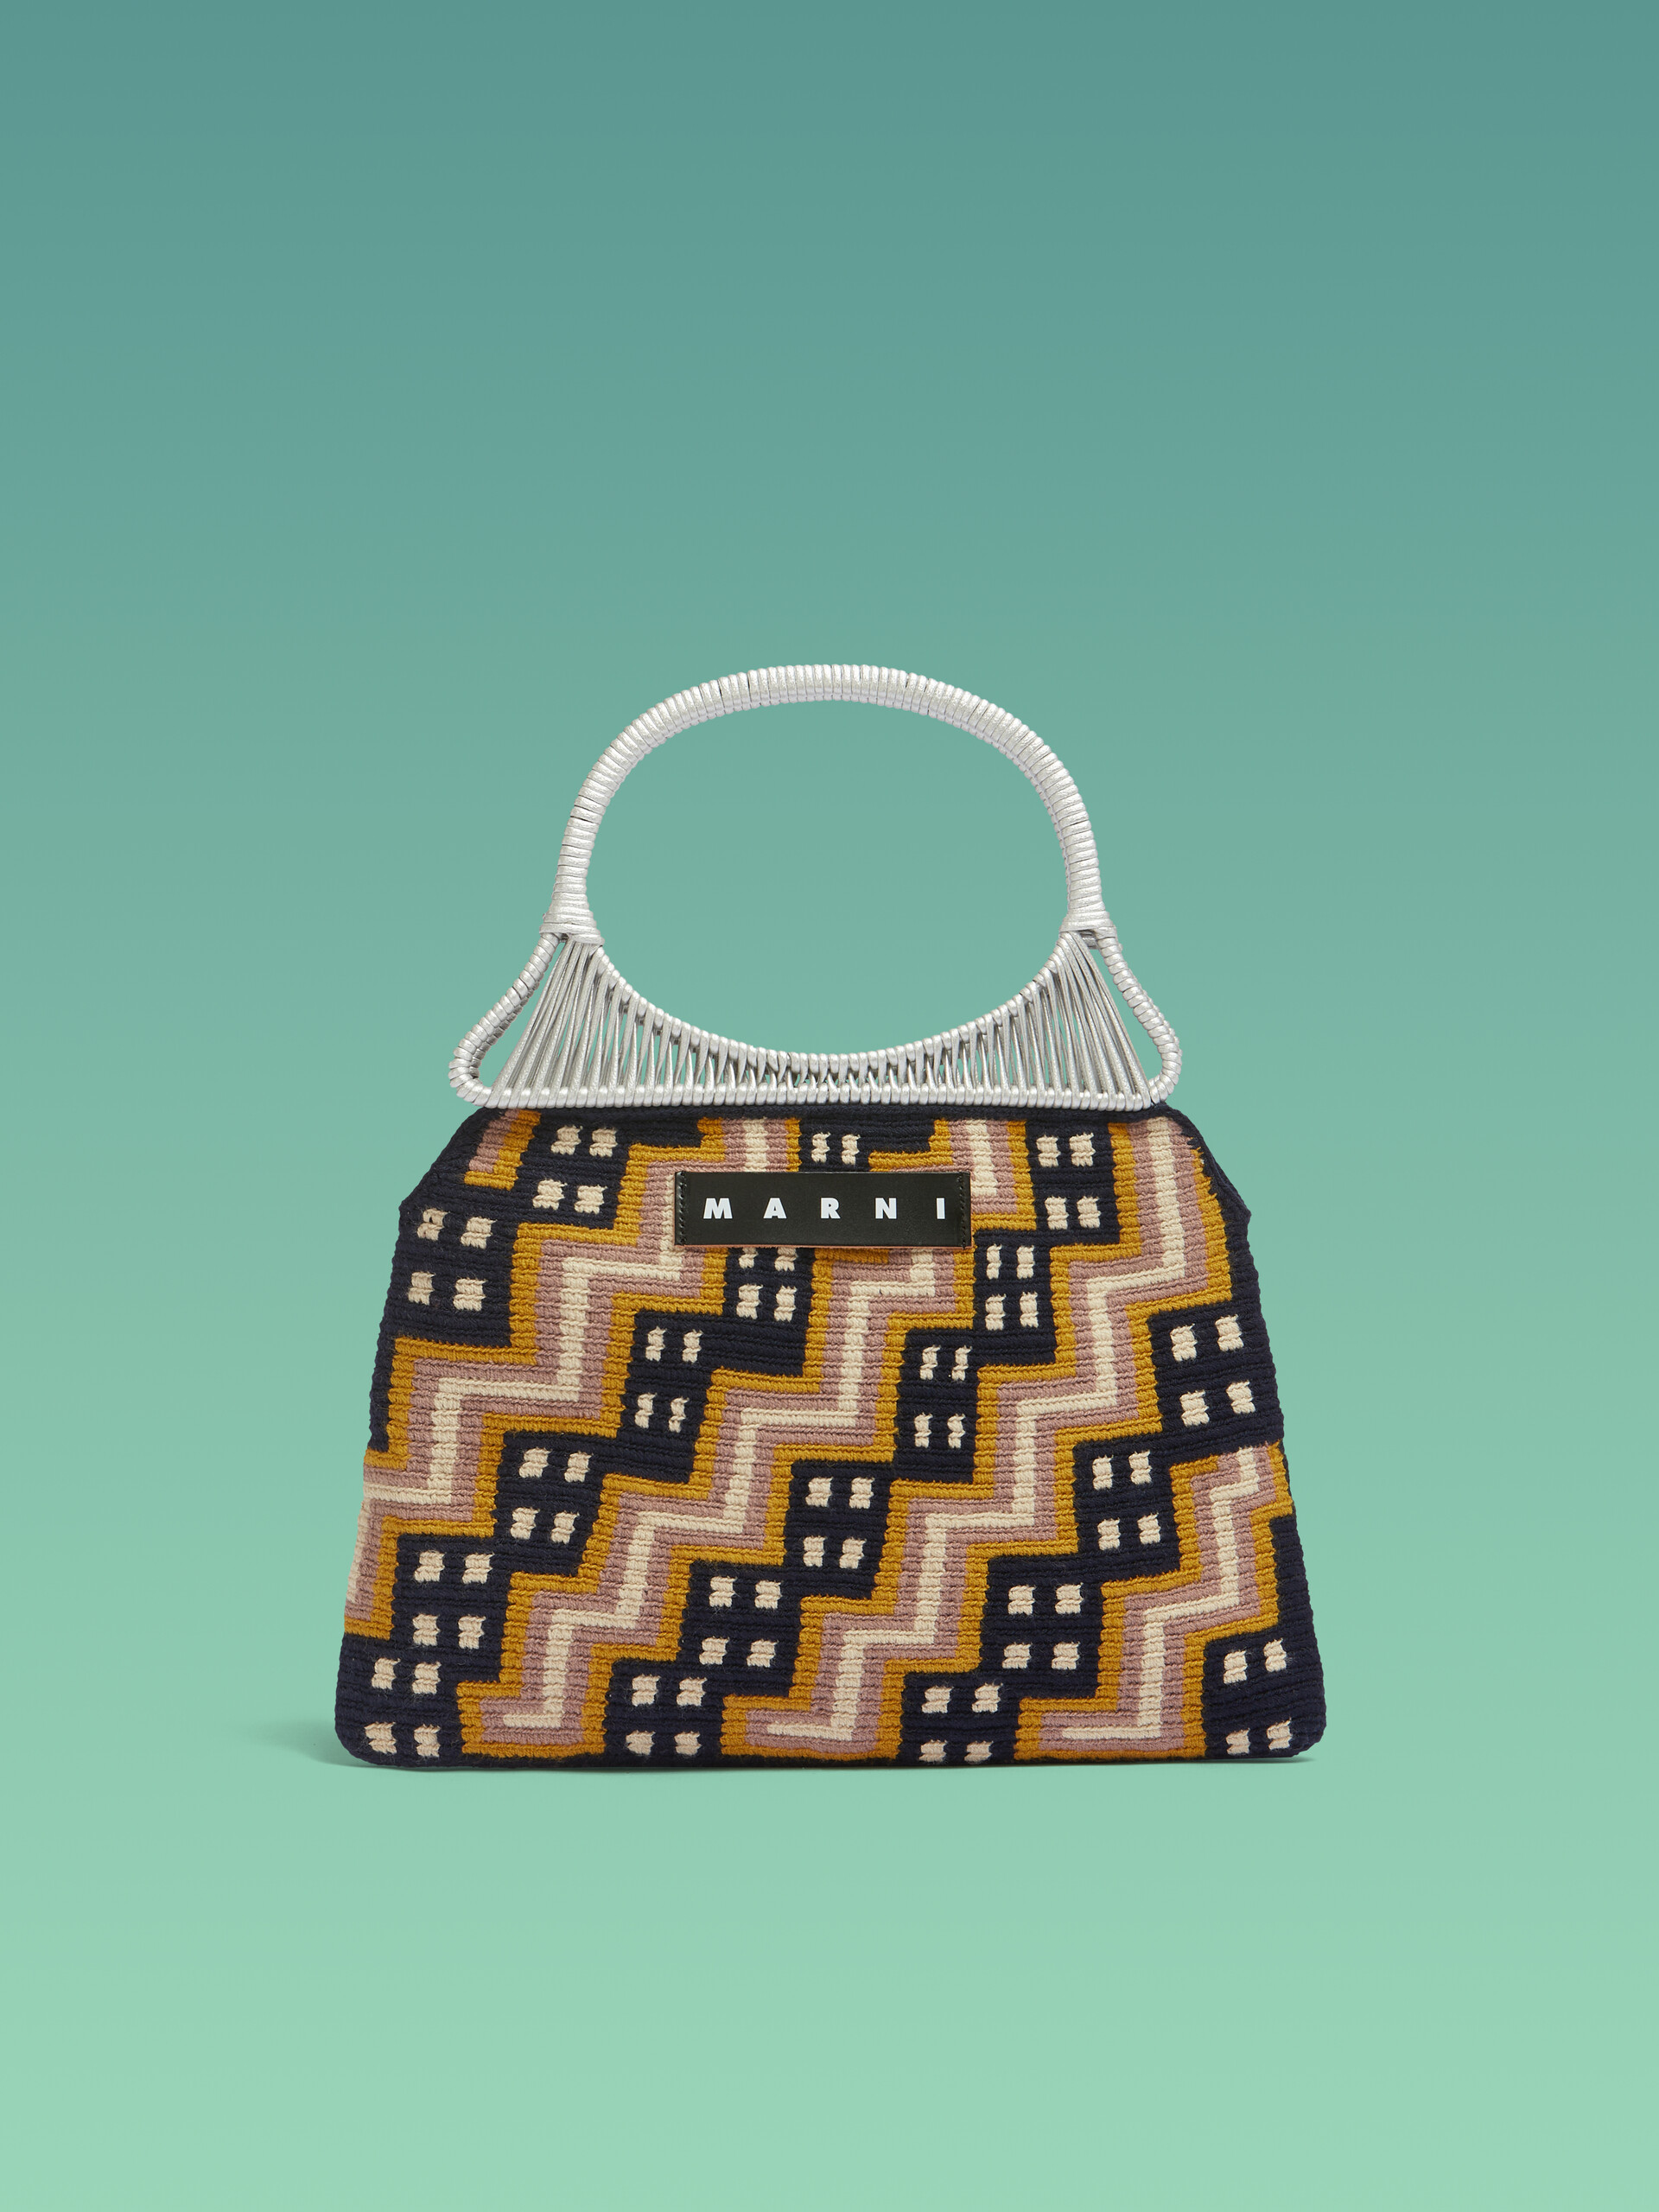 Orange geometric cotton knit MARNI MARKET handbag - Shopping Bags - Image 1